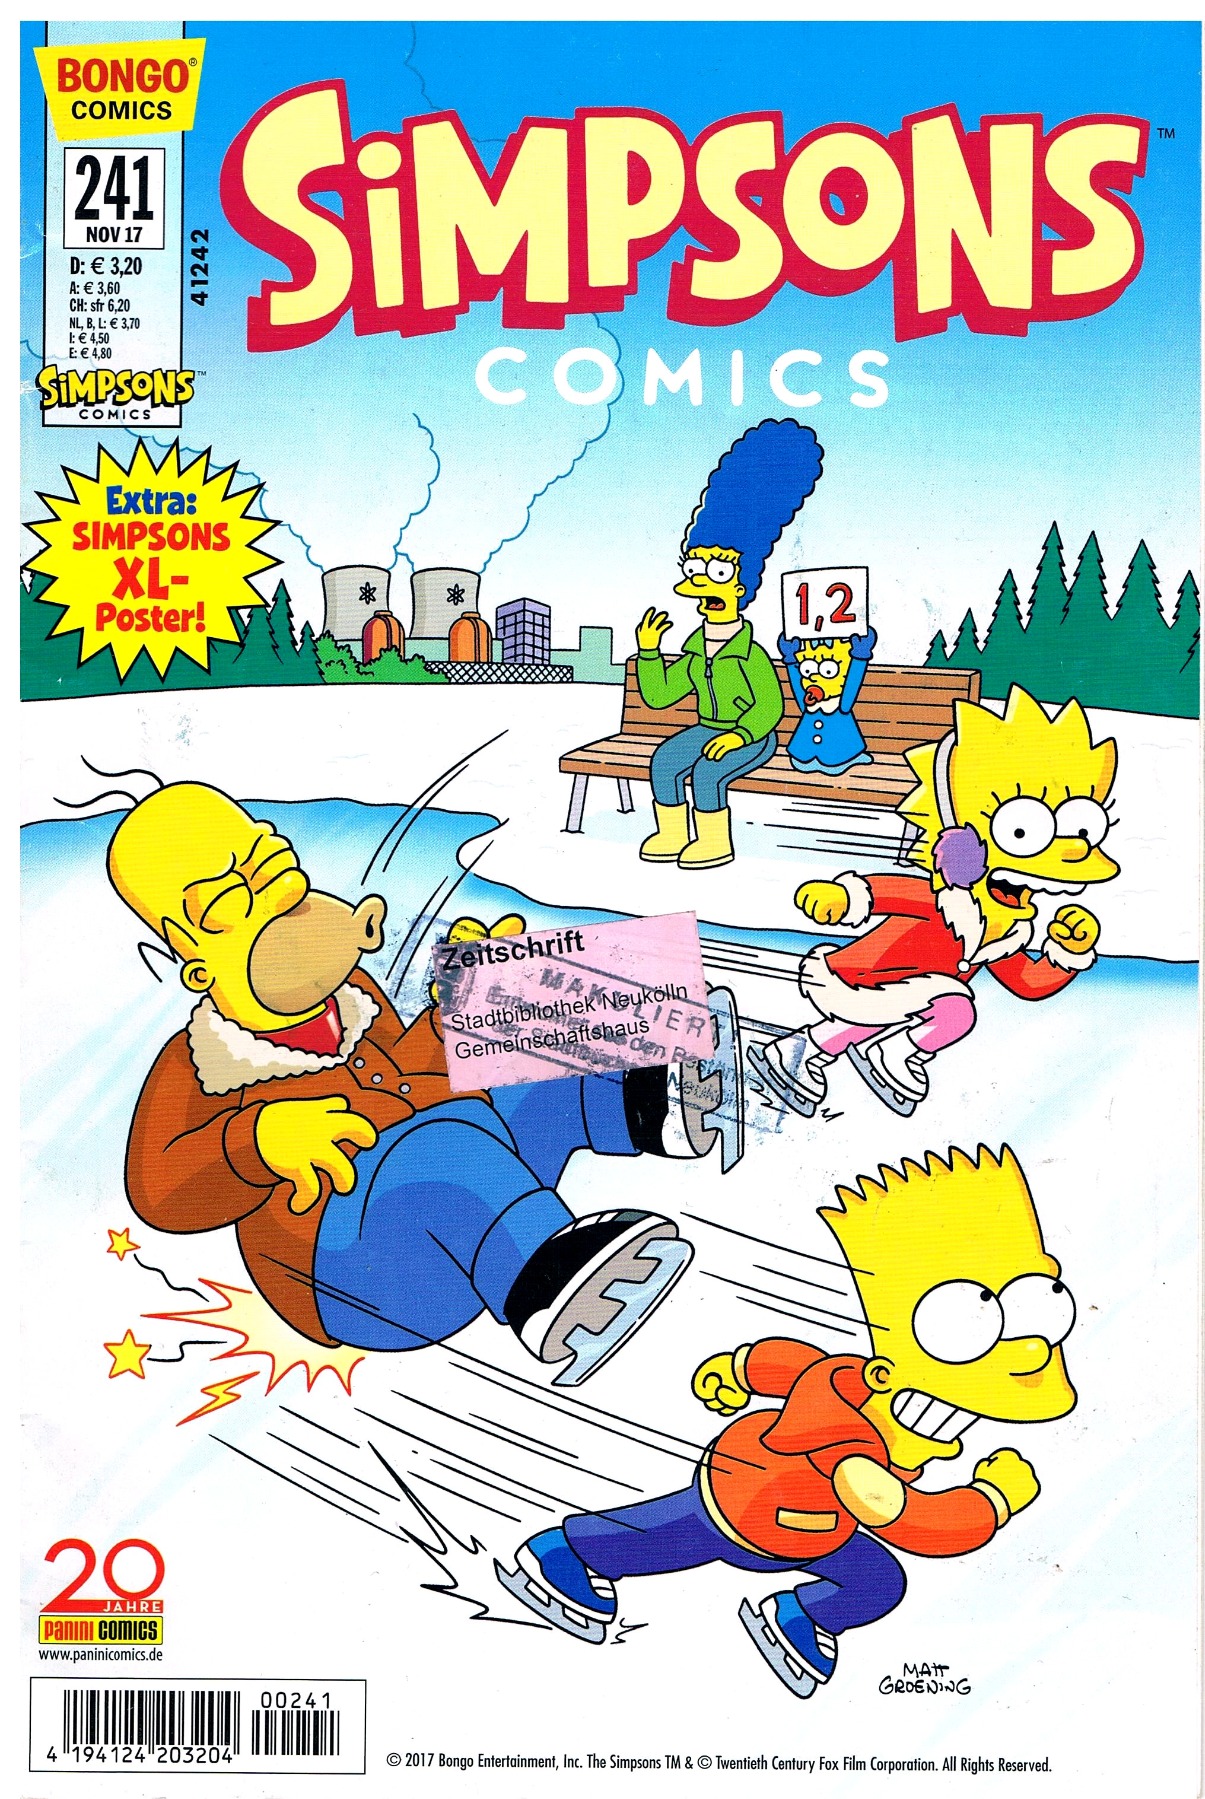 Simpsons Comics - Issue 241 - Nov 17 2017